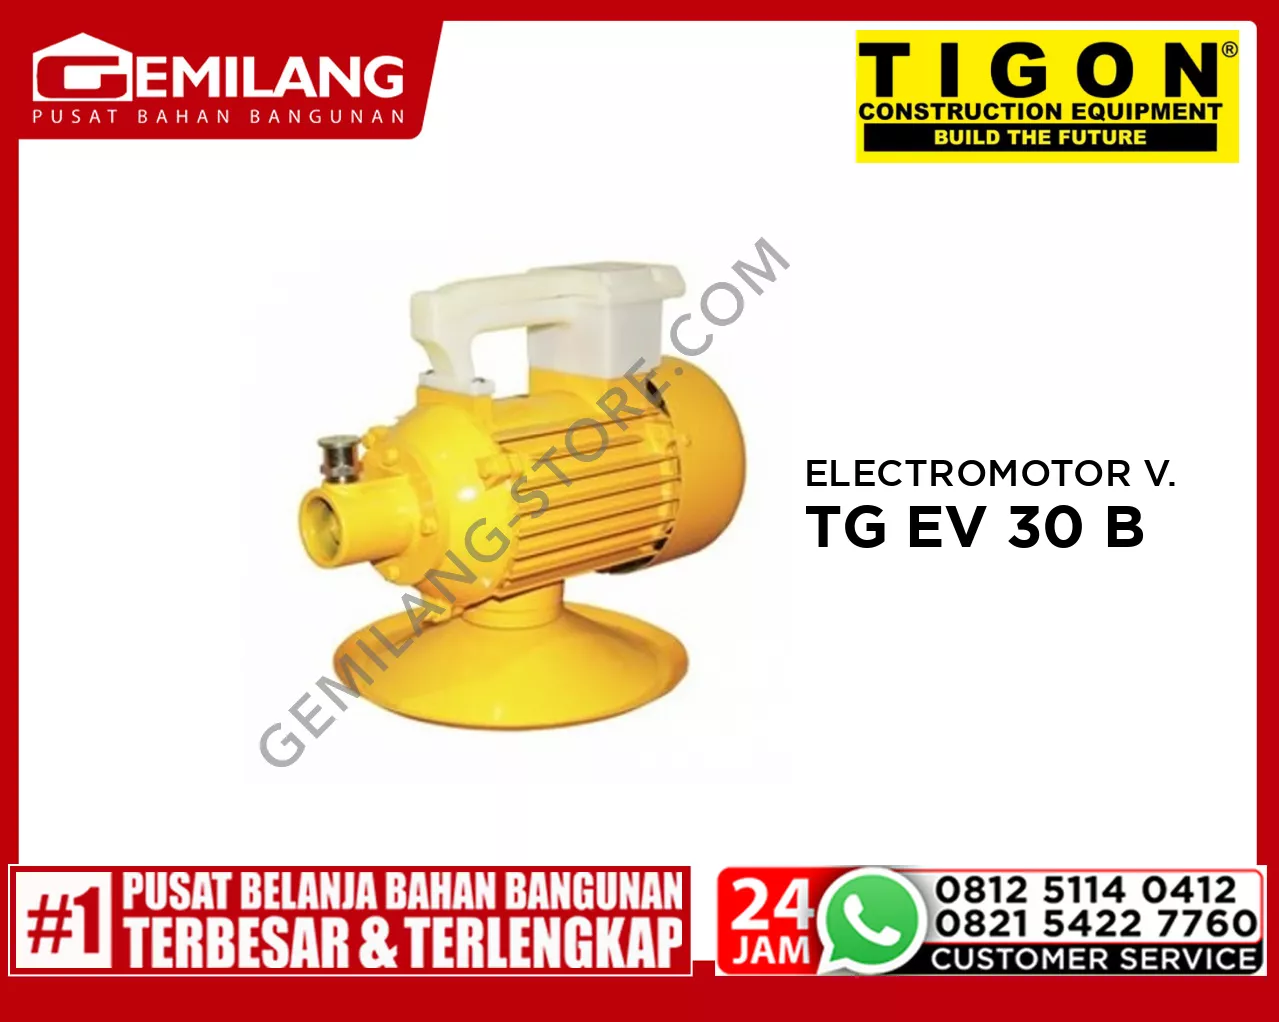 TIGON ELECTROMOTOR VIBRATOR TG EV 30 B